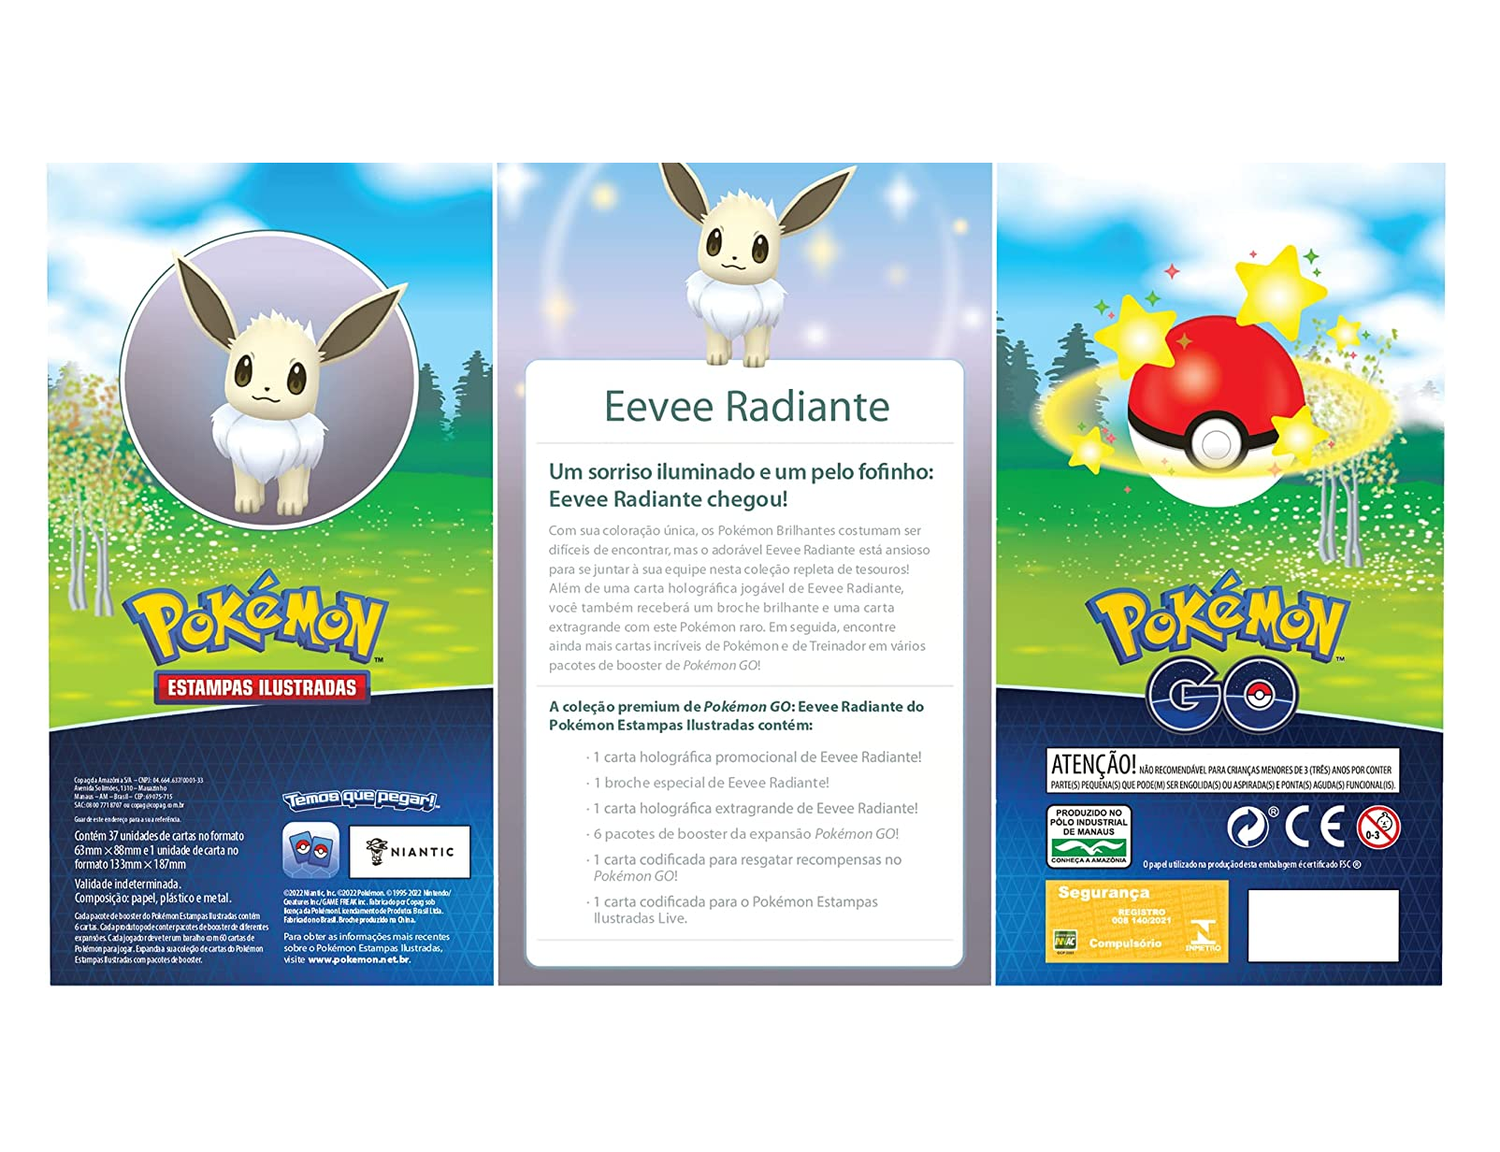 Pokémon GO - Códigos e como resgatá-los para recompensas